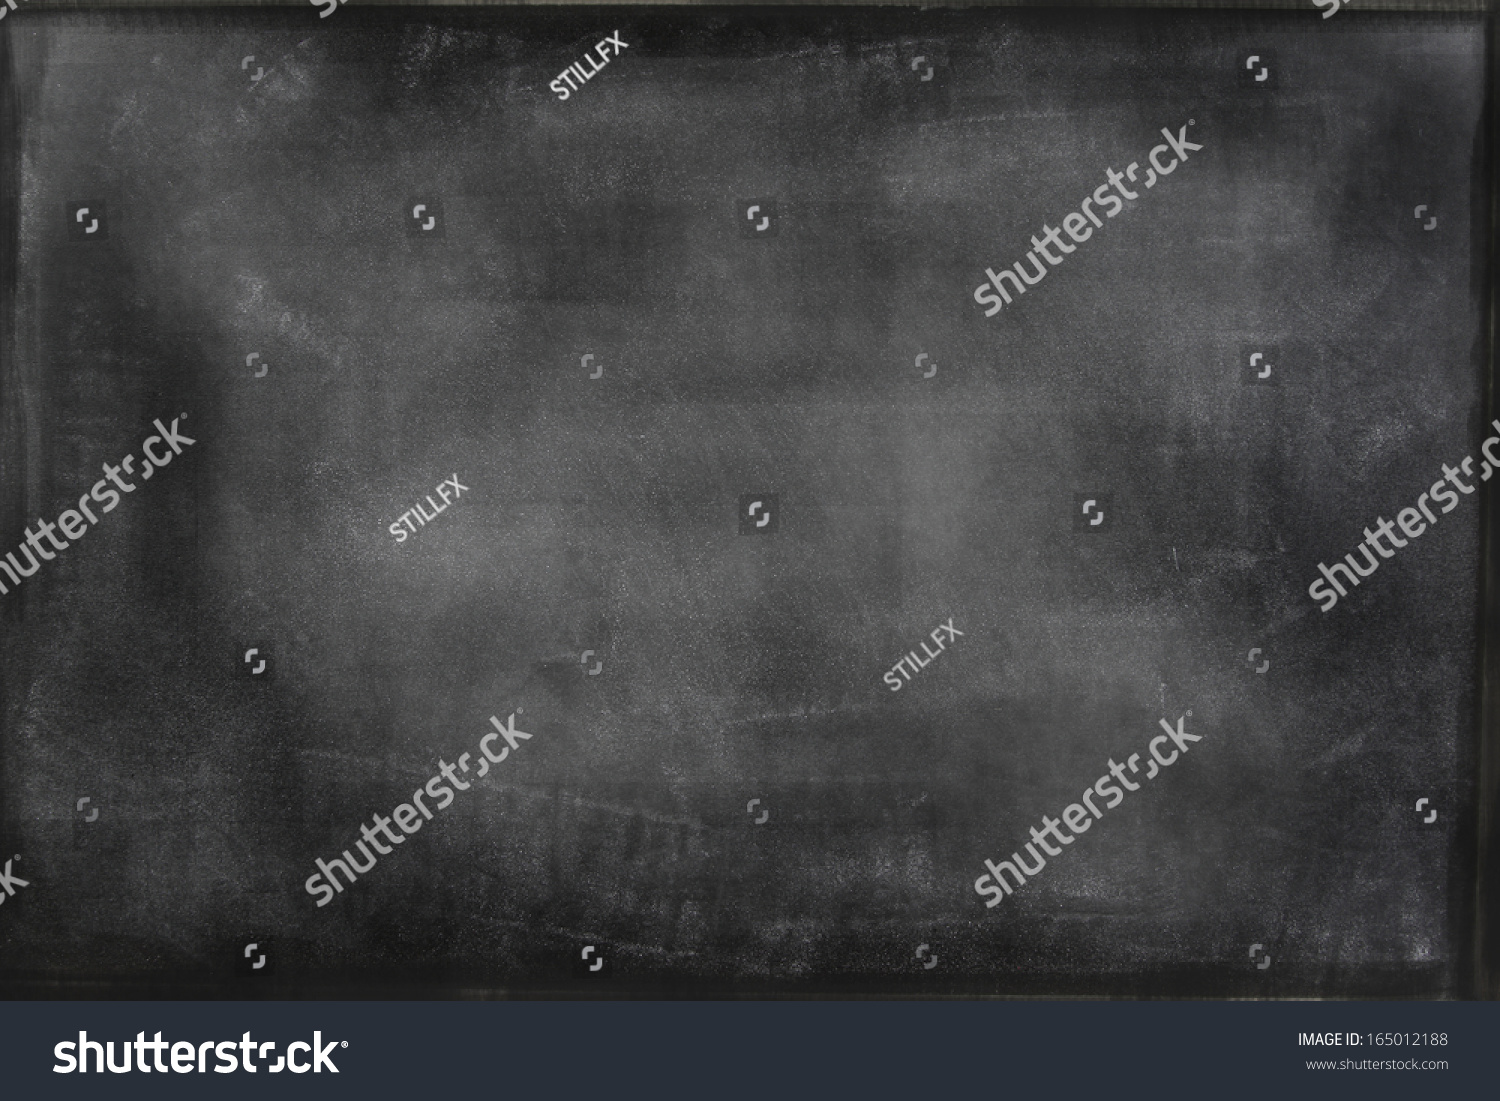 Chalk rubbed out on blackboard  #165012188